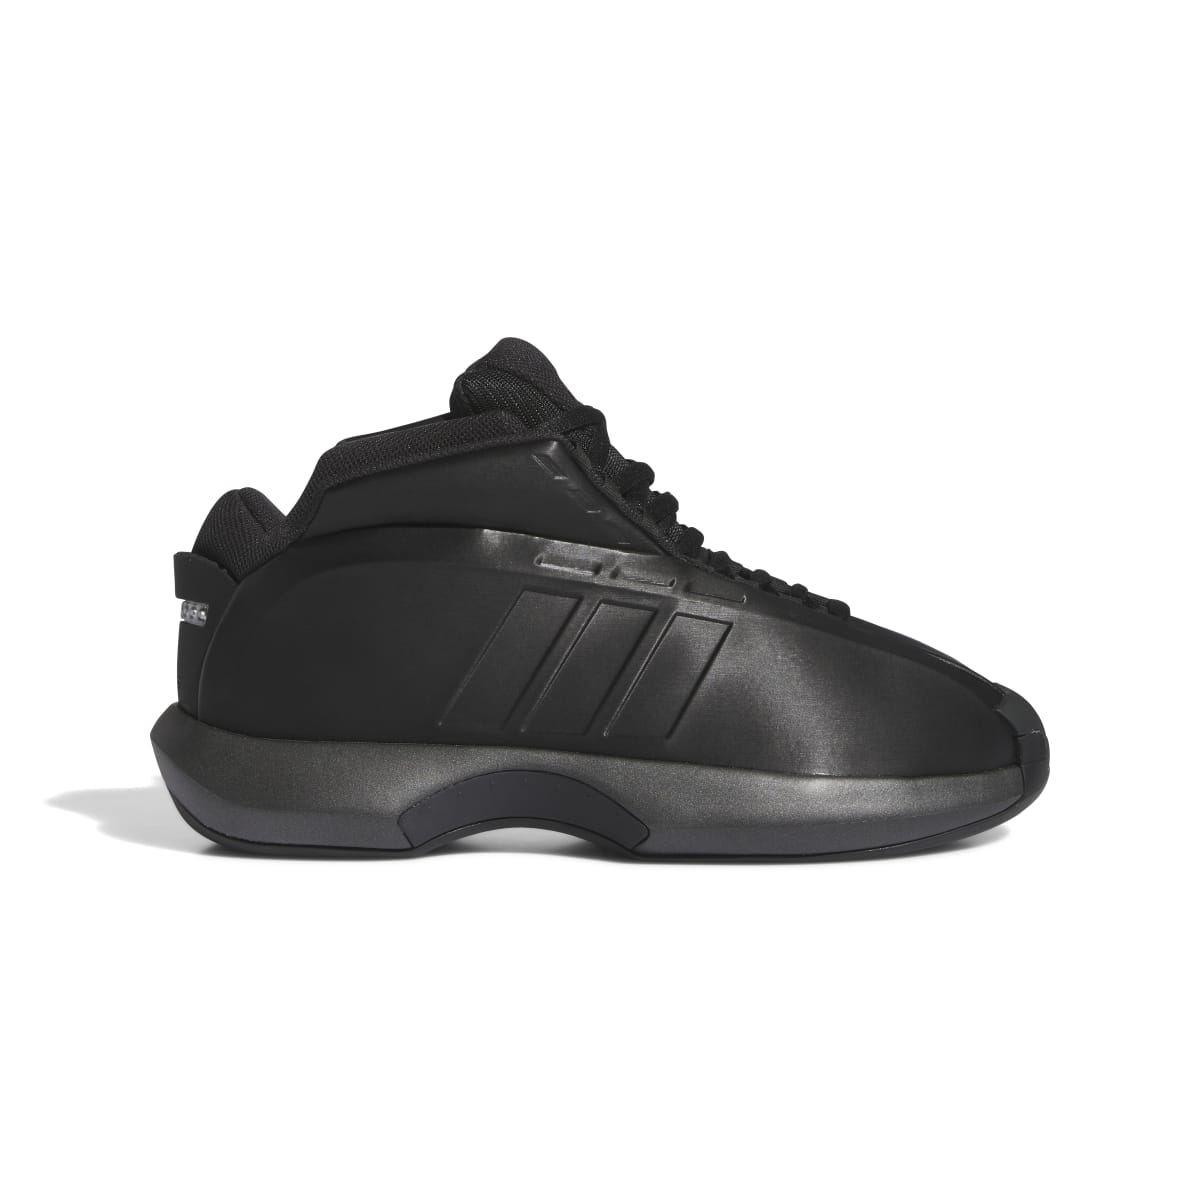 Buy Adidas Crazy 1 - Men's Shoes online | Foot Locker UAE